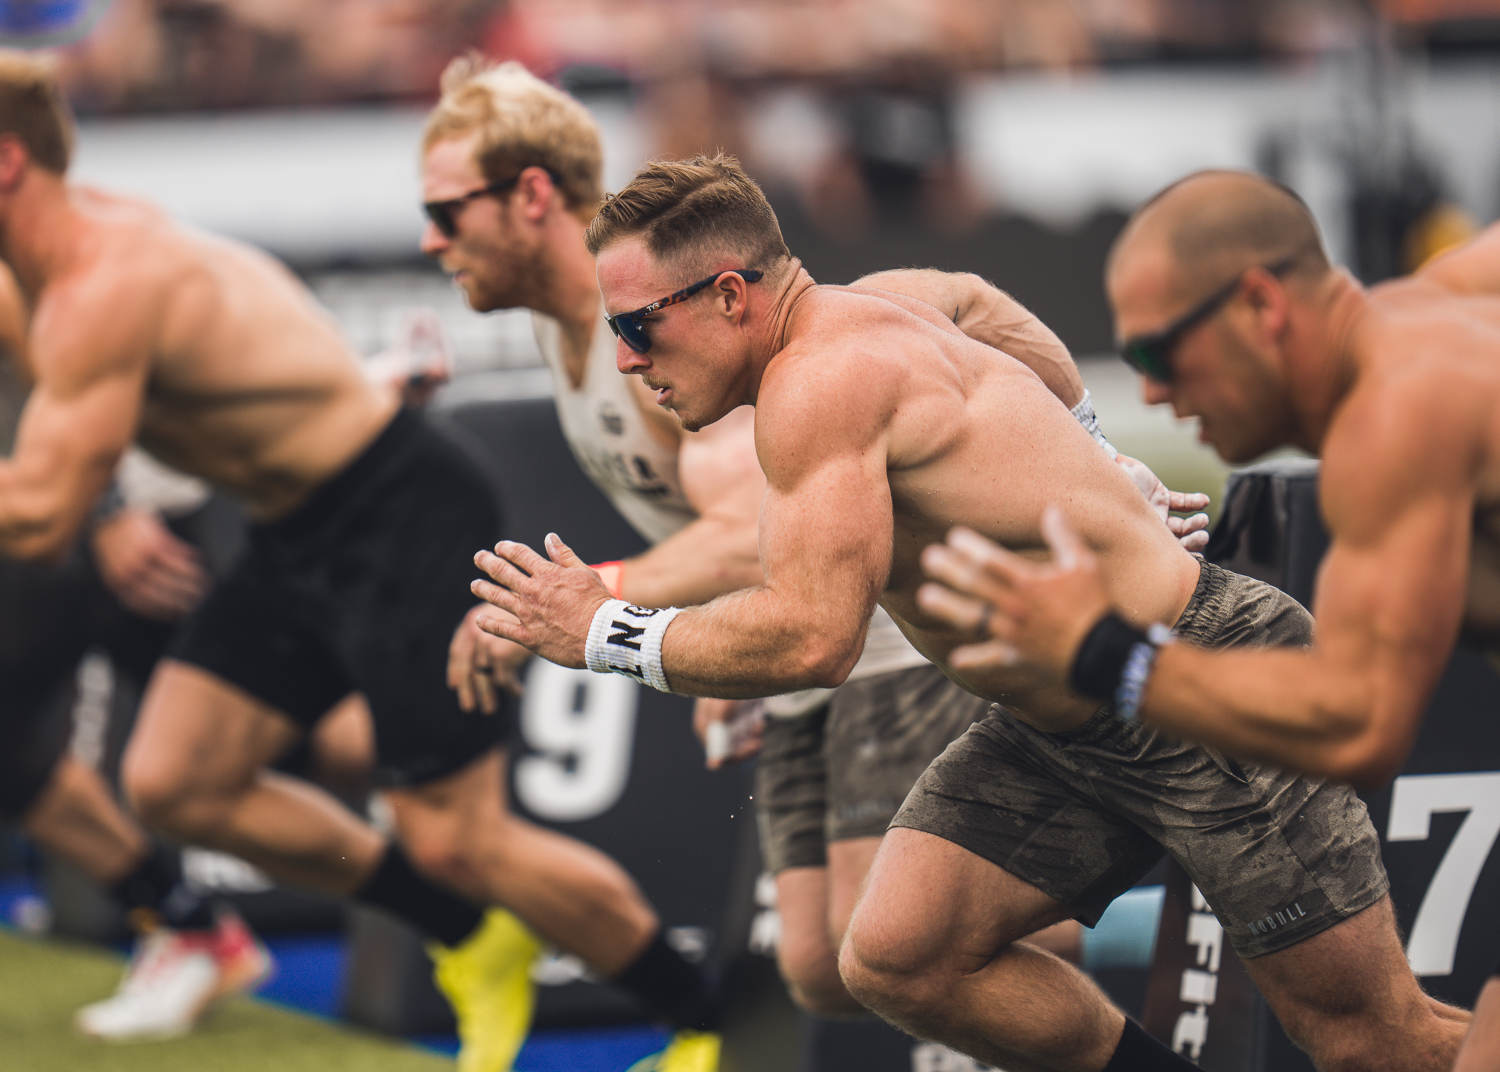 do crossfit athletes take steroids?